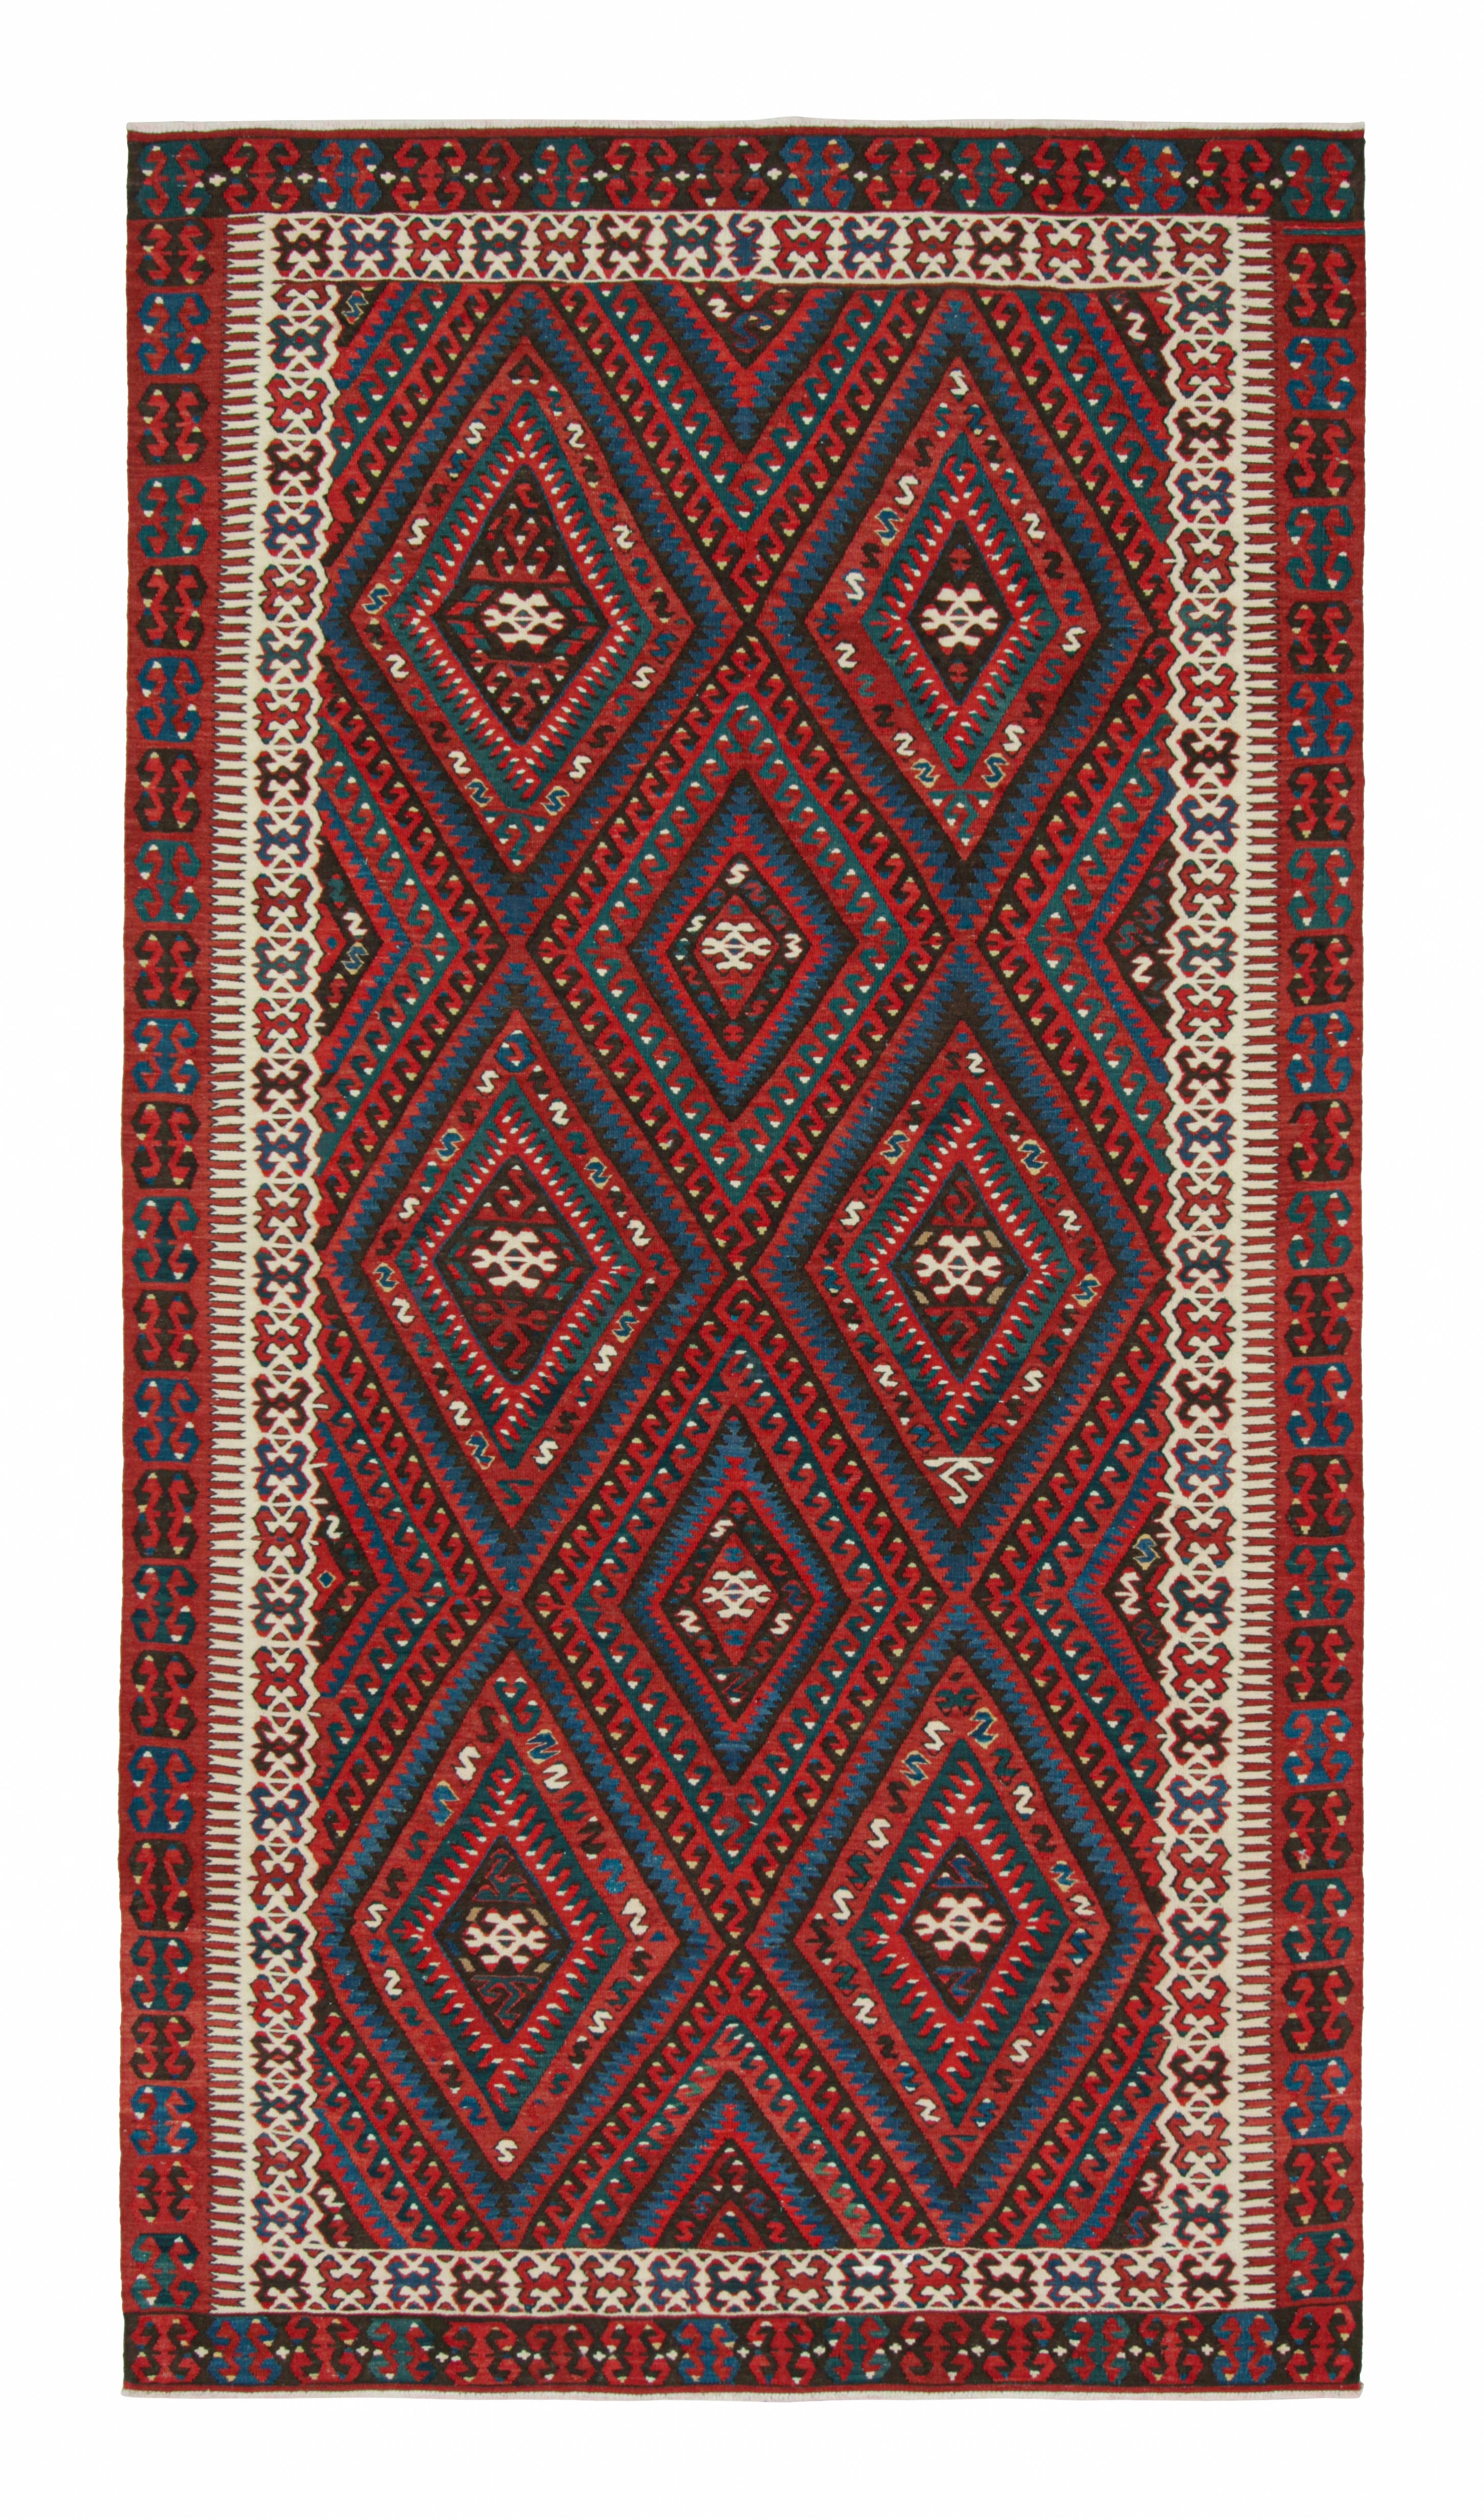 Vintage Midcentury Fethiye Diamond Tribal Red Blue Wool Kilim Rug by Rug & Kilim For Sale